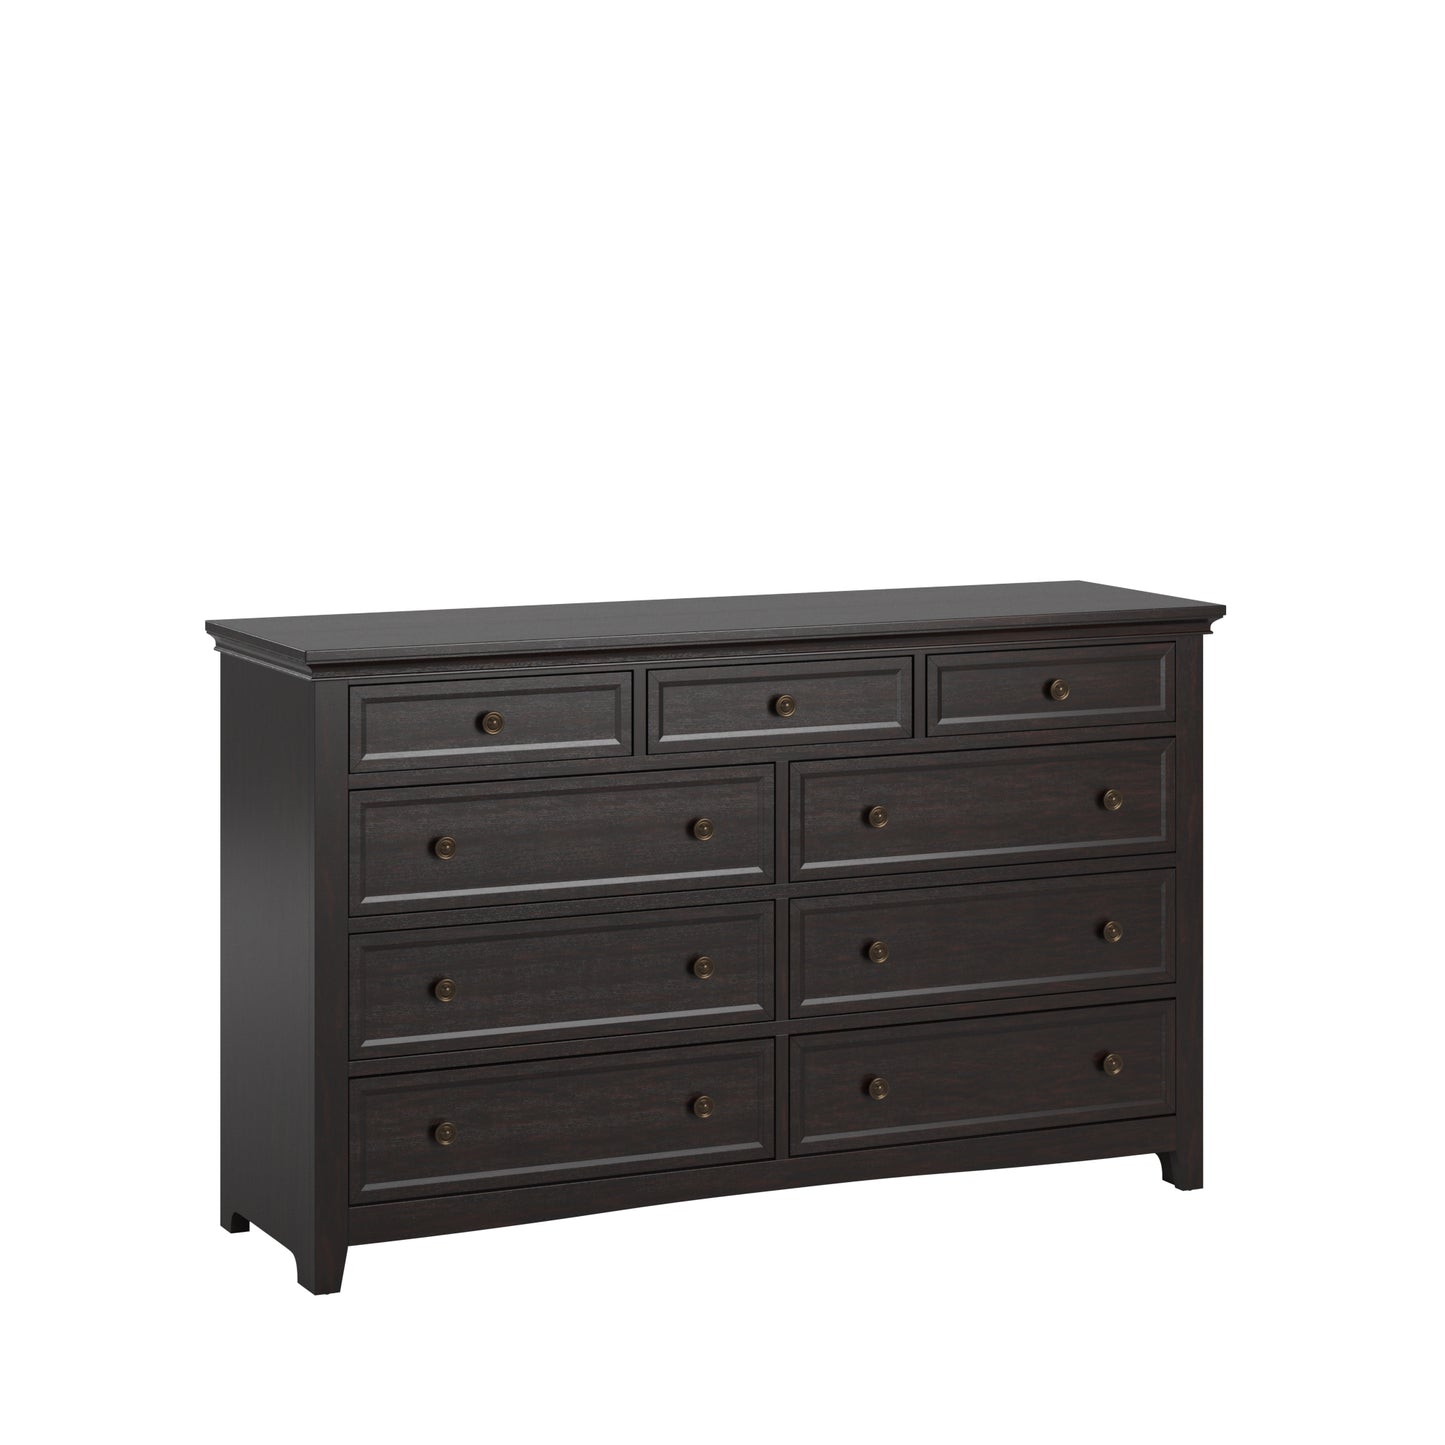 9-Drawer Wood Modular Storage Dresser - Antique Black Finish, Dresser Only